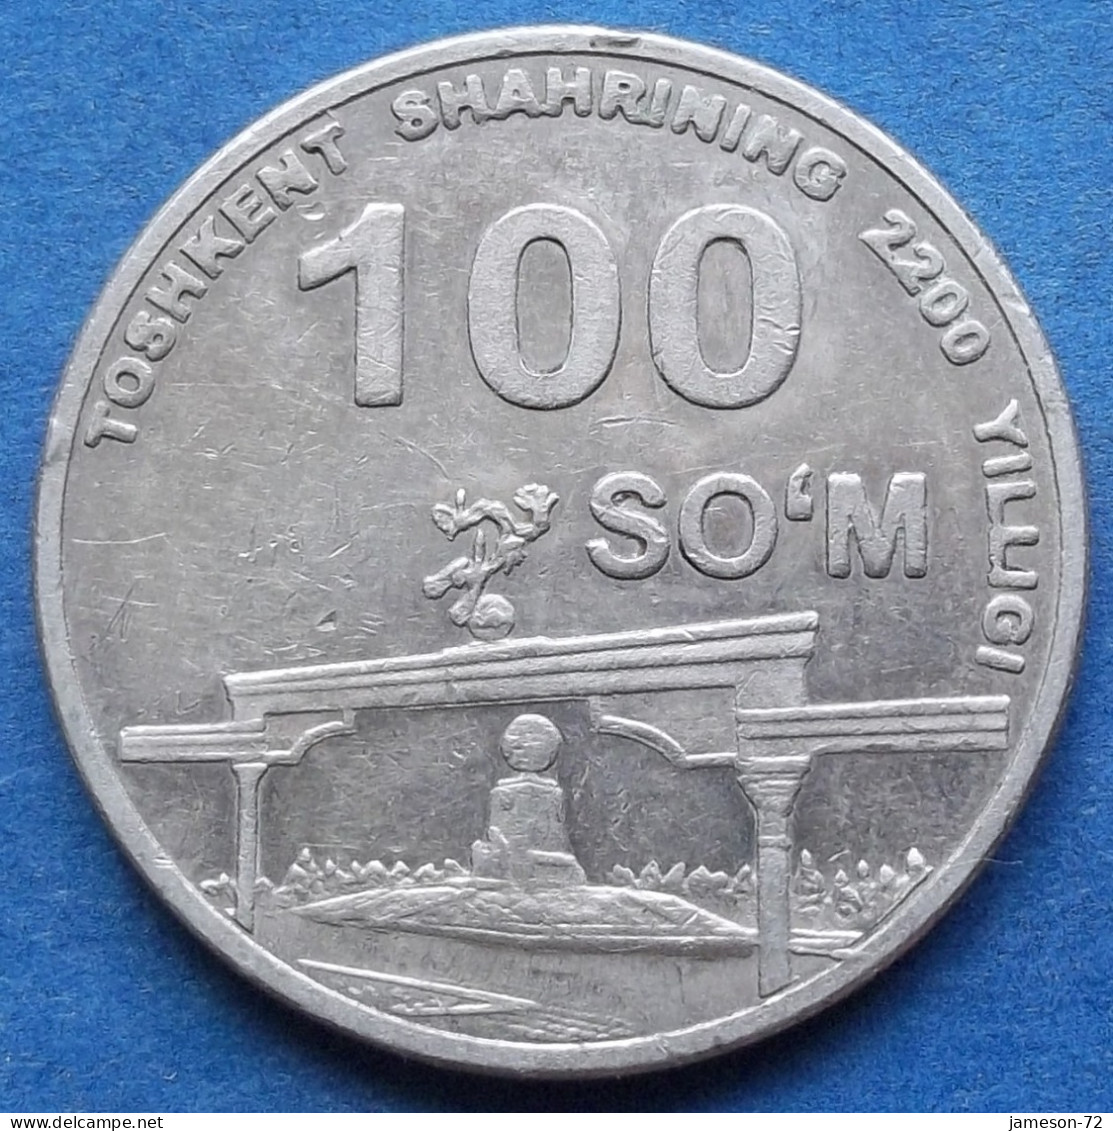 UZBEKISTAN - 100 So'm 2009 "Arch Of Independence" KM# 31 - Edelweiss Coins - Usbekistan